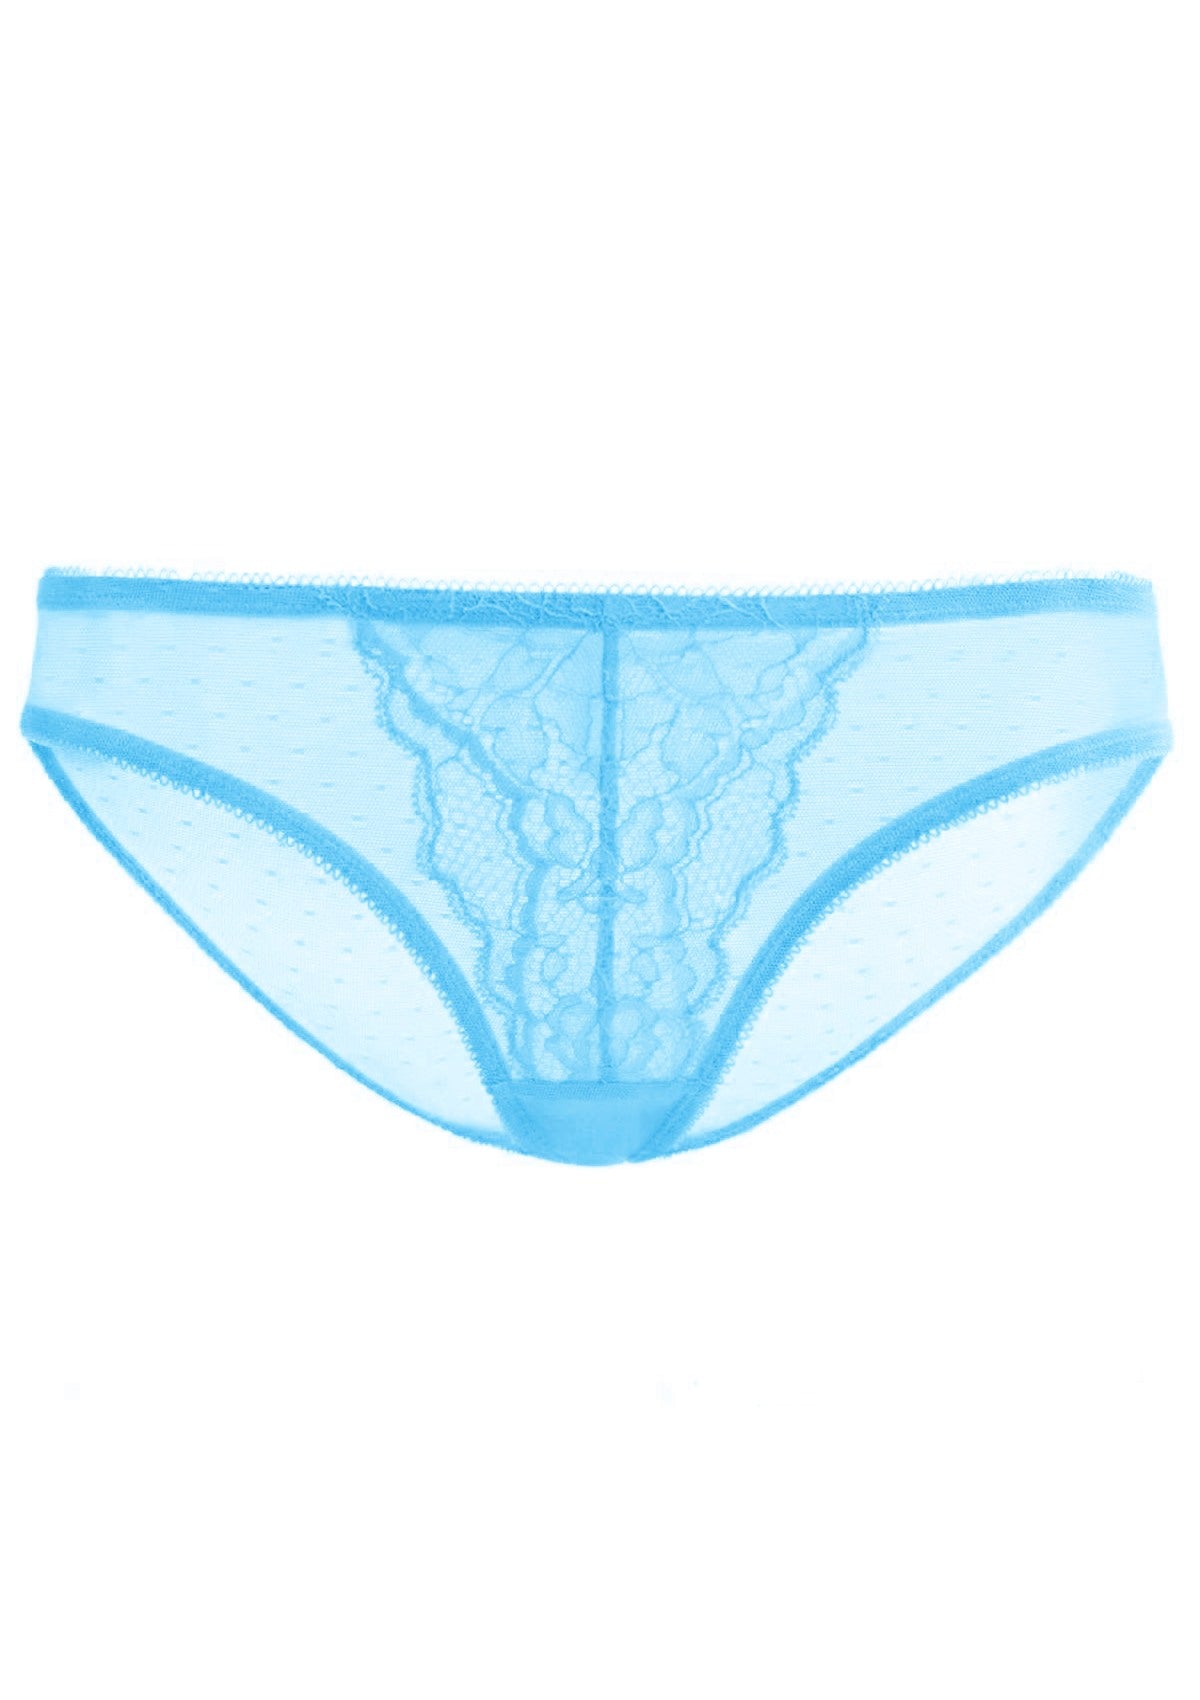 HSIA Mid-Rise Sheer Stylish Lace-Trimmed Supportive Comfy Mesh Pantie - L / Capri Blue / Bikini